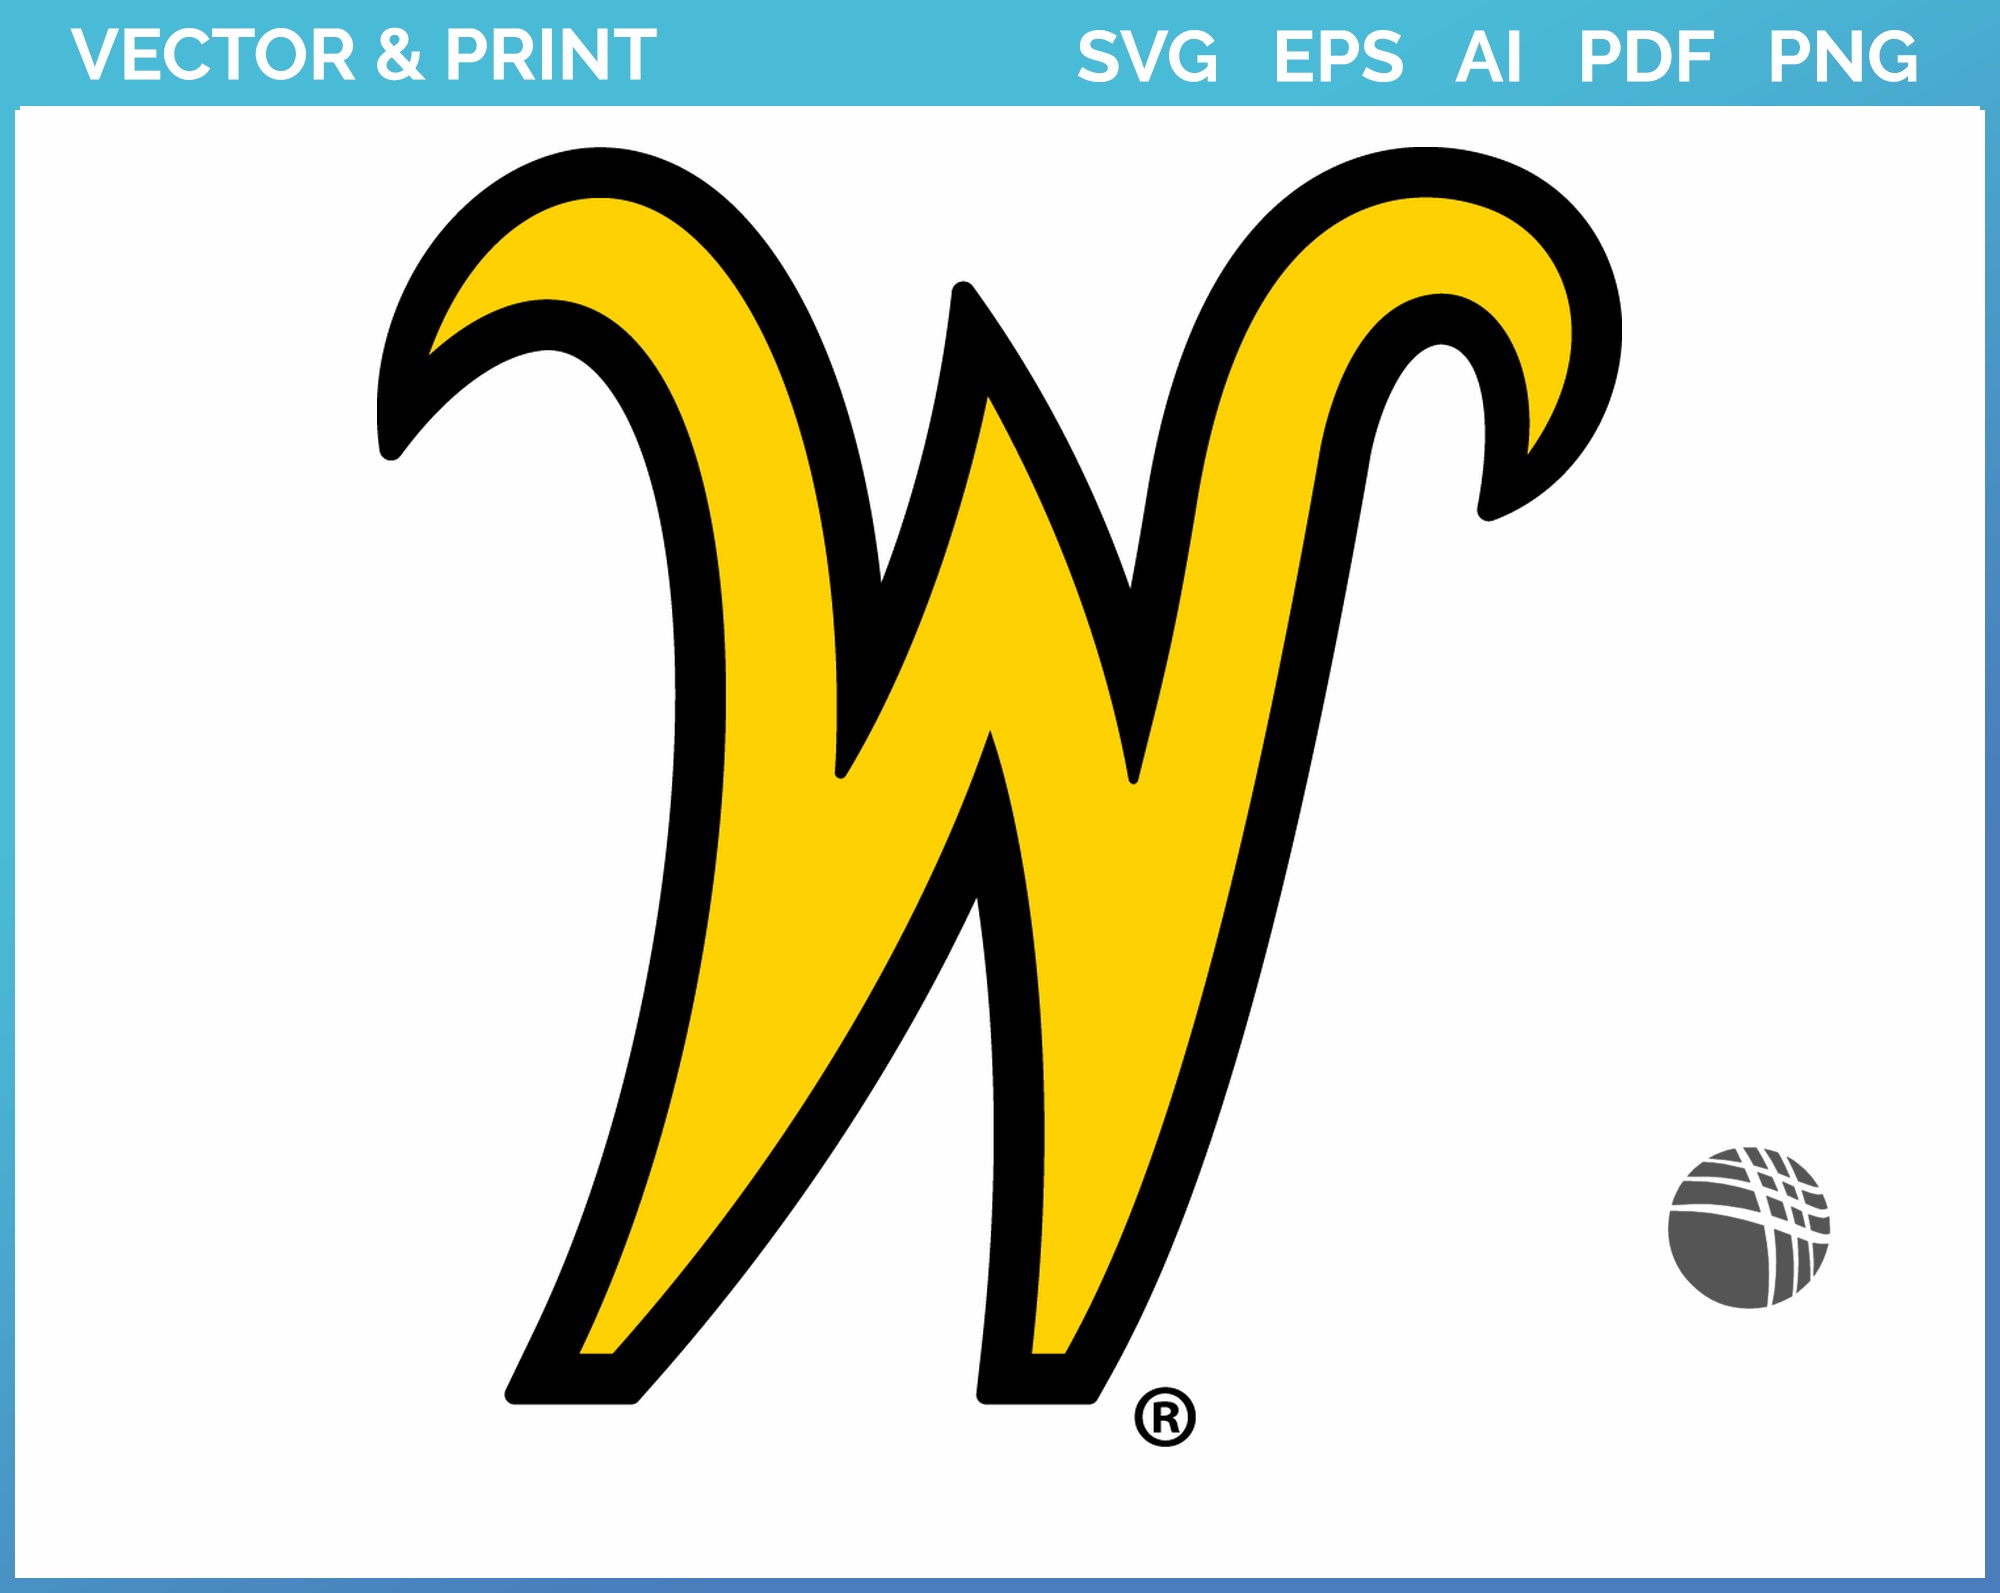 Wichita State Shockers Logo Evolution Heritage Banner – Palm Beach  Autographs LLC